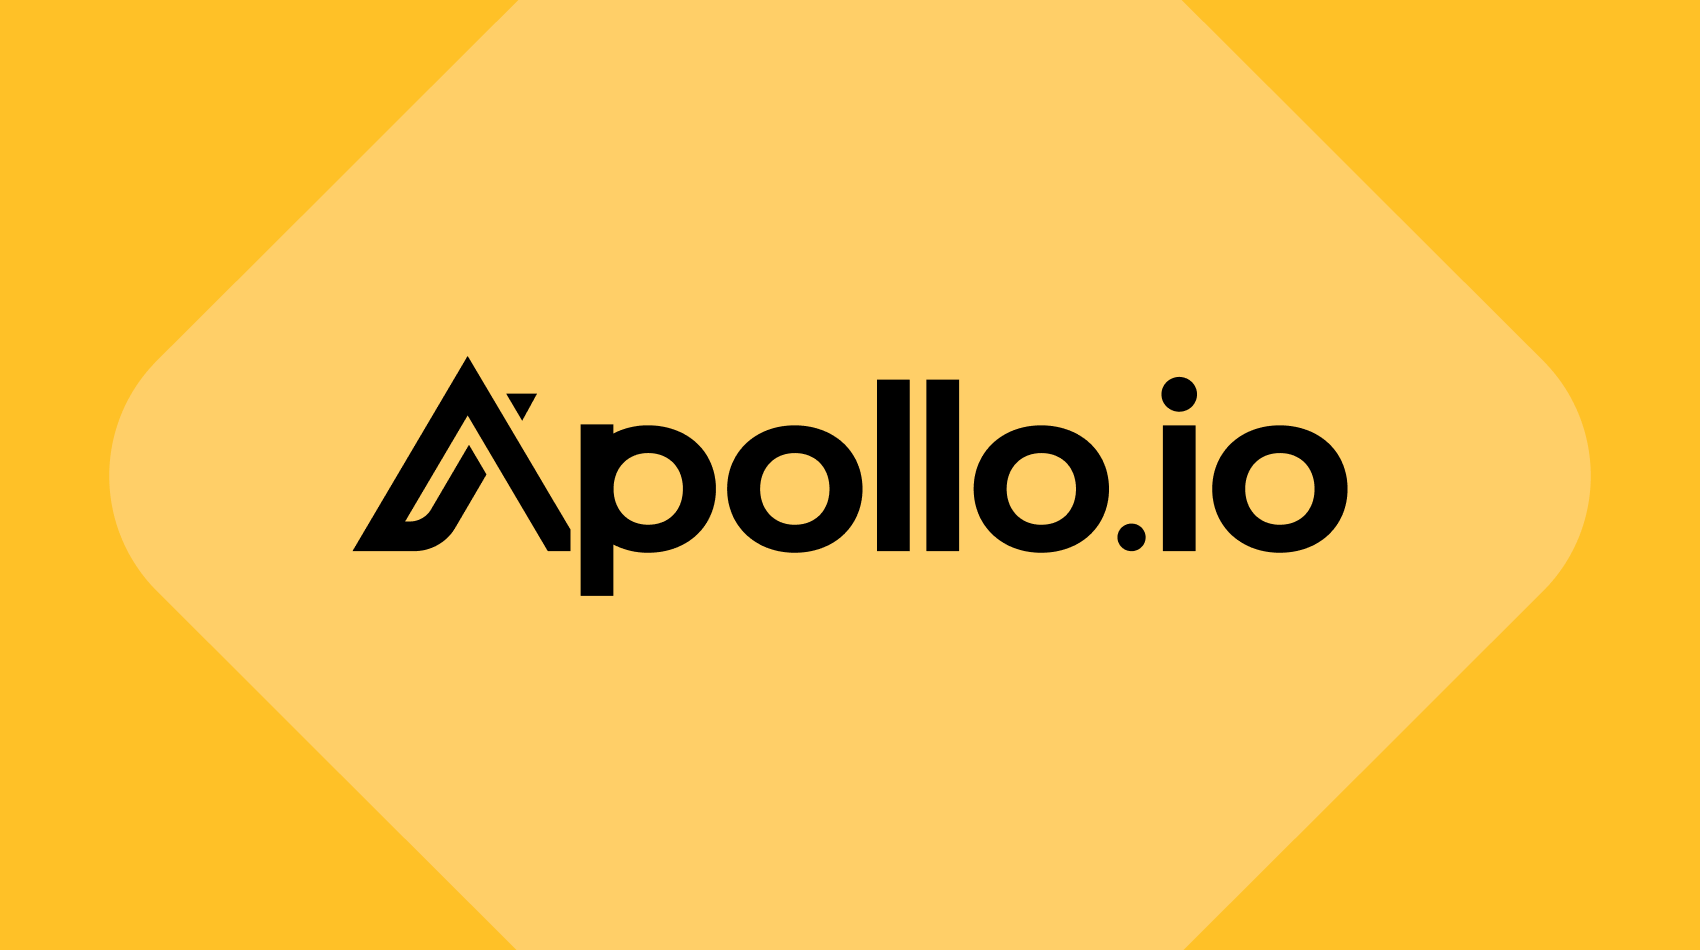 Apollo.io Gets a Smart New Logo | Apollo